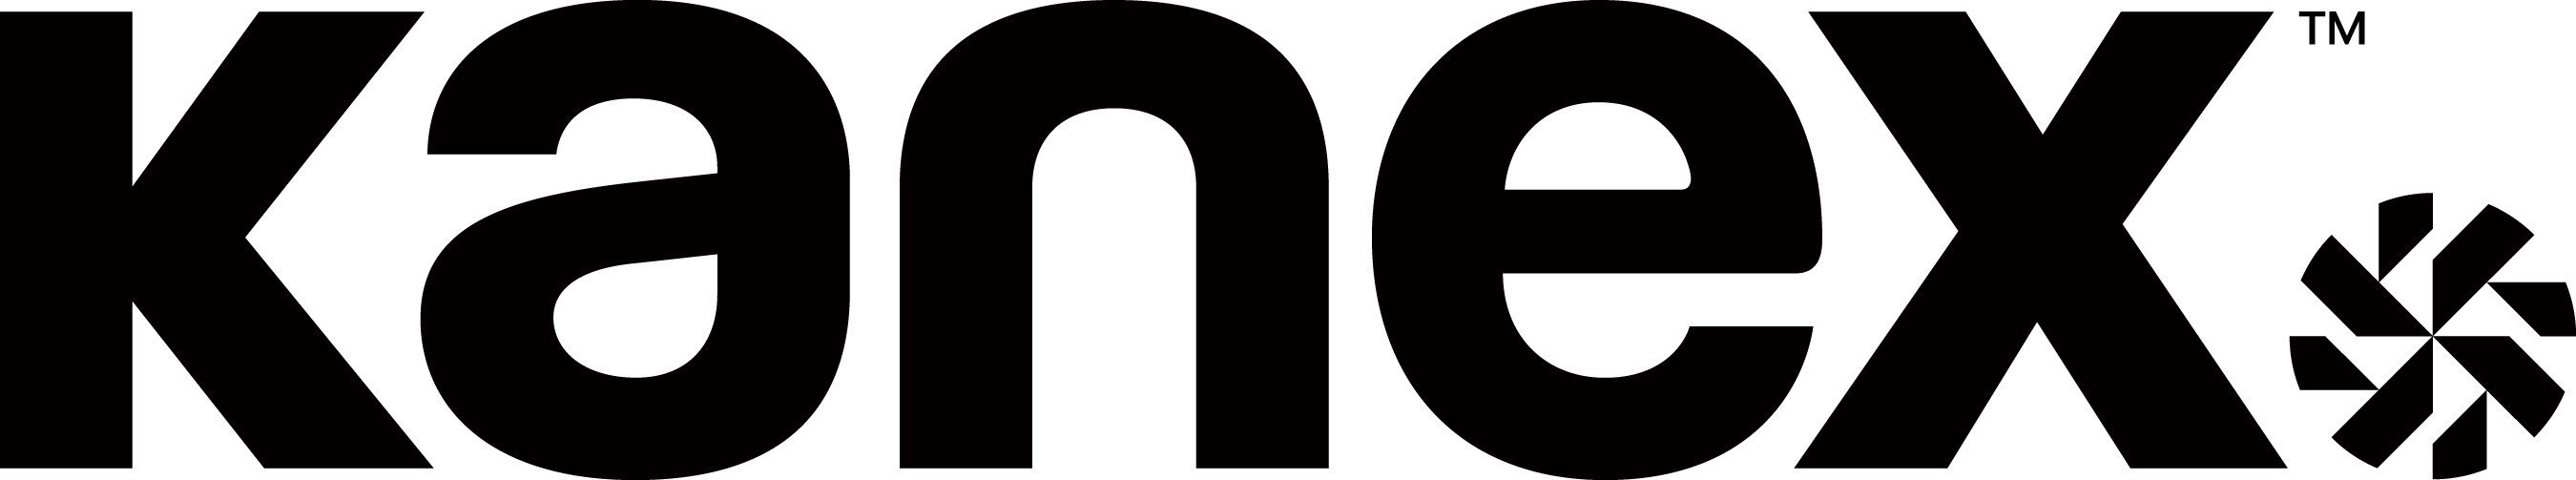 Kanex logo.